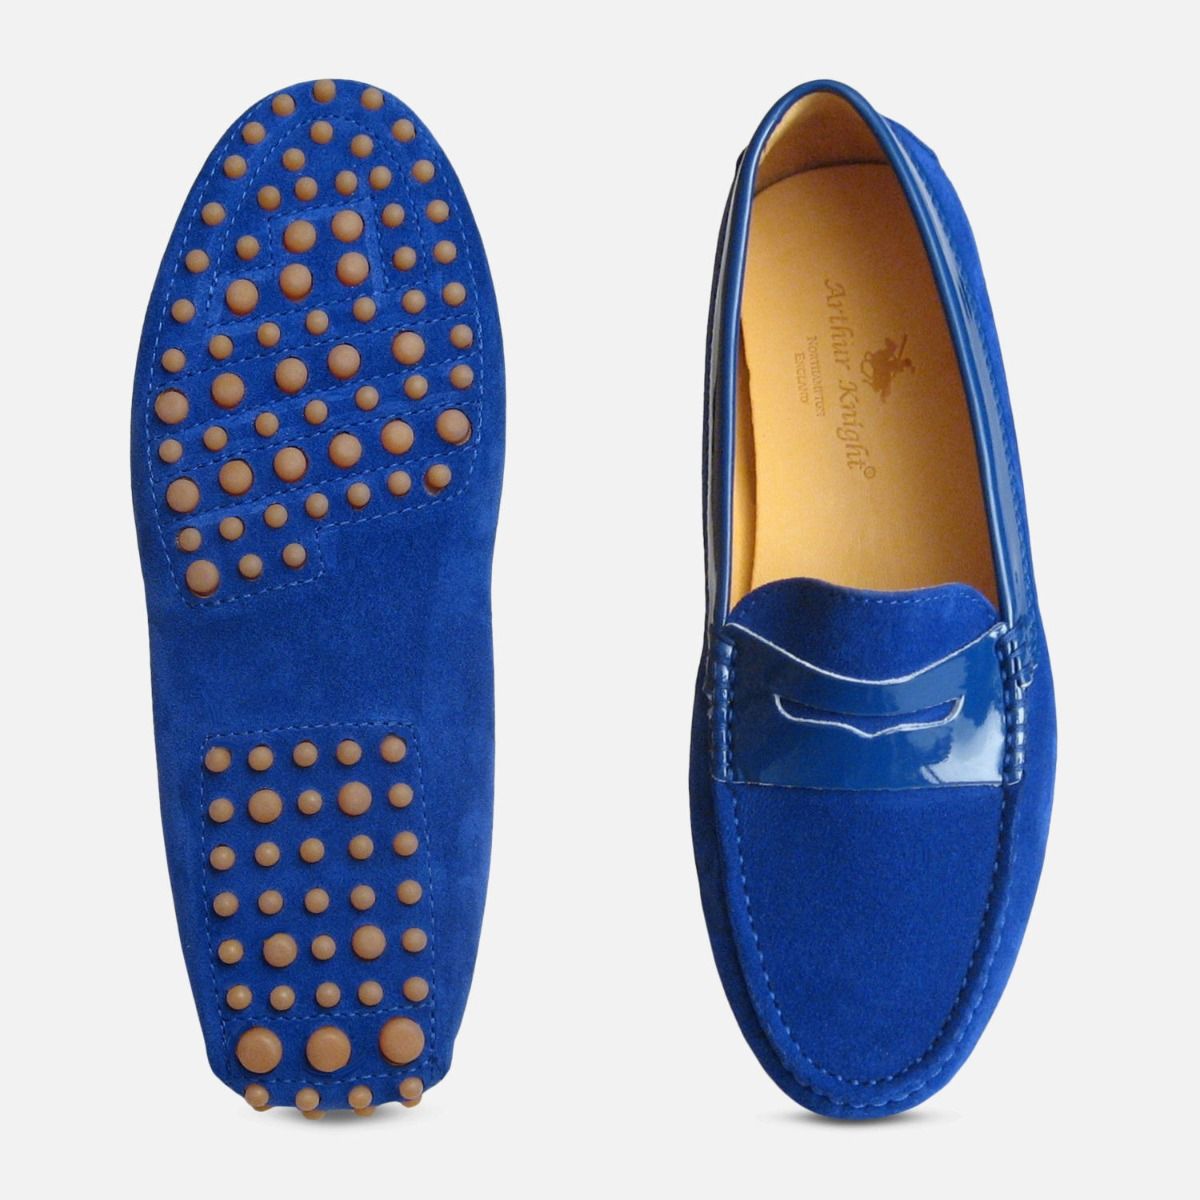 blue suede shoes ladies